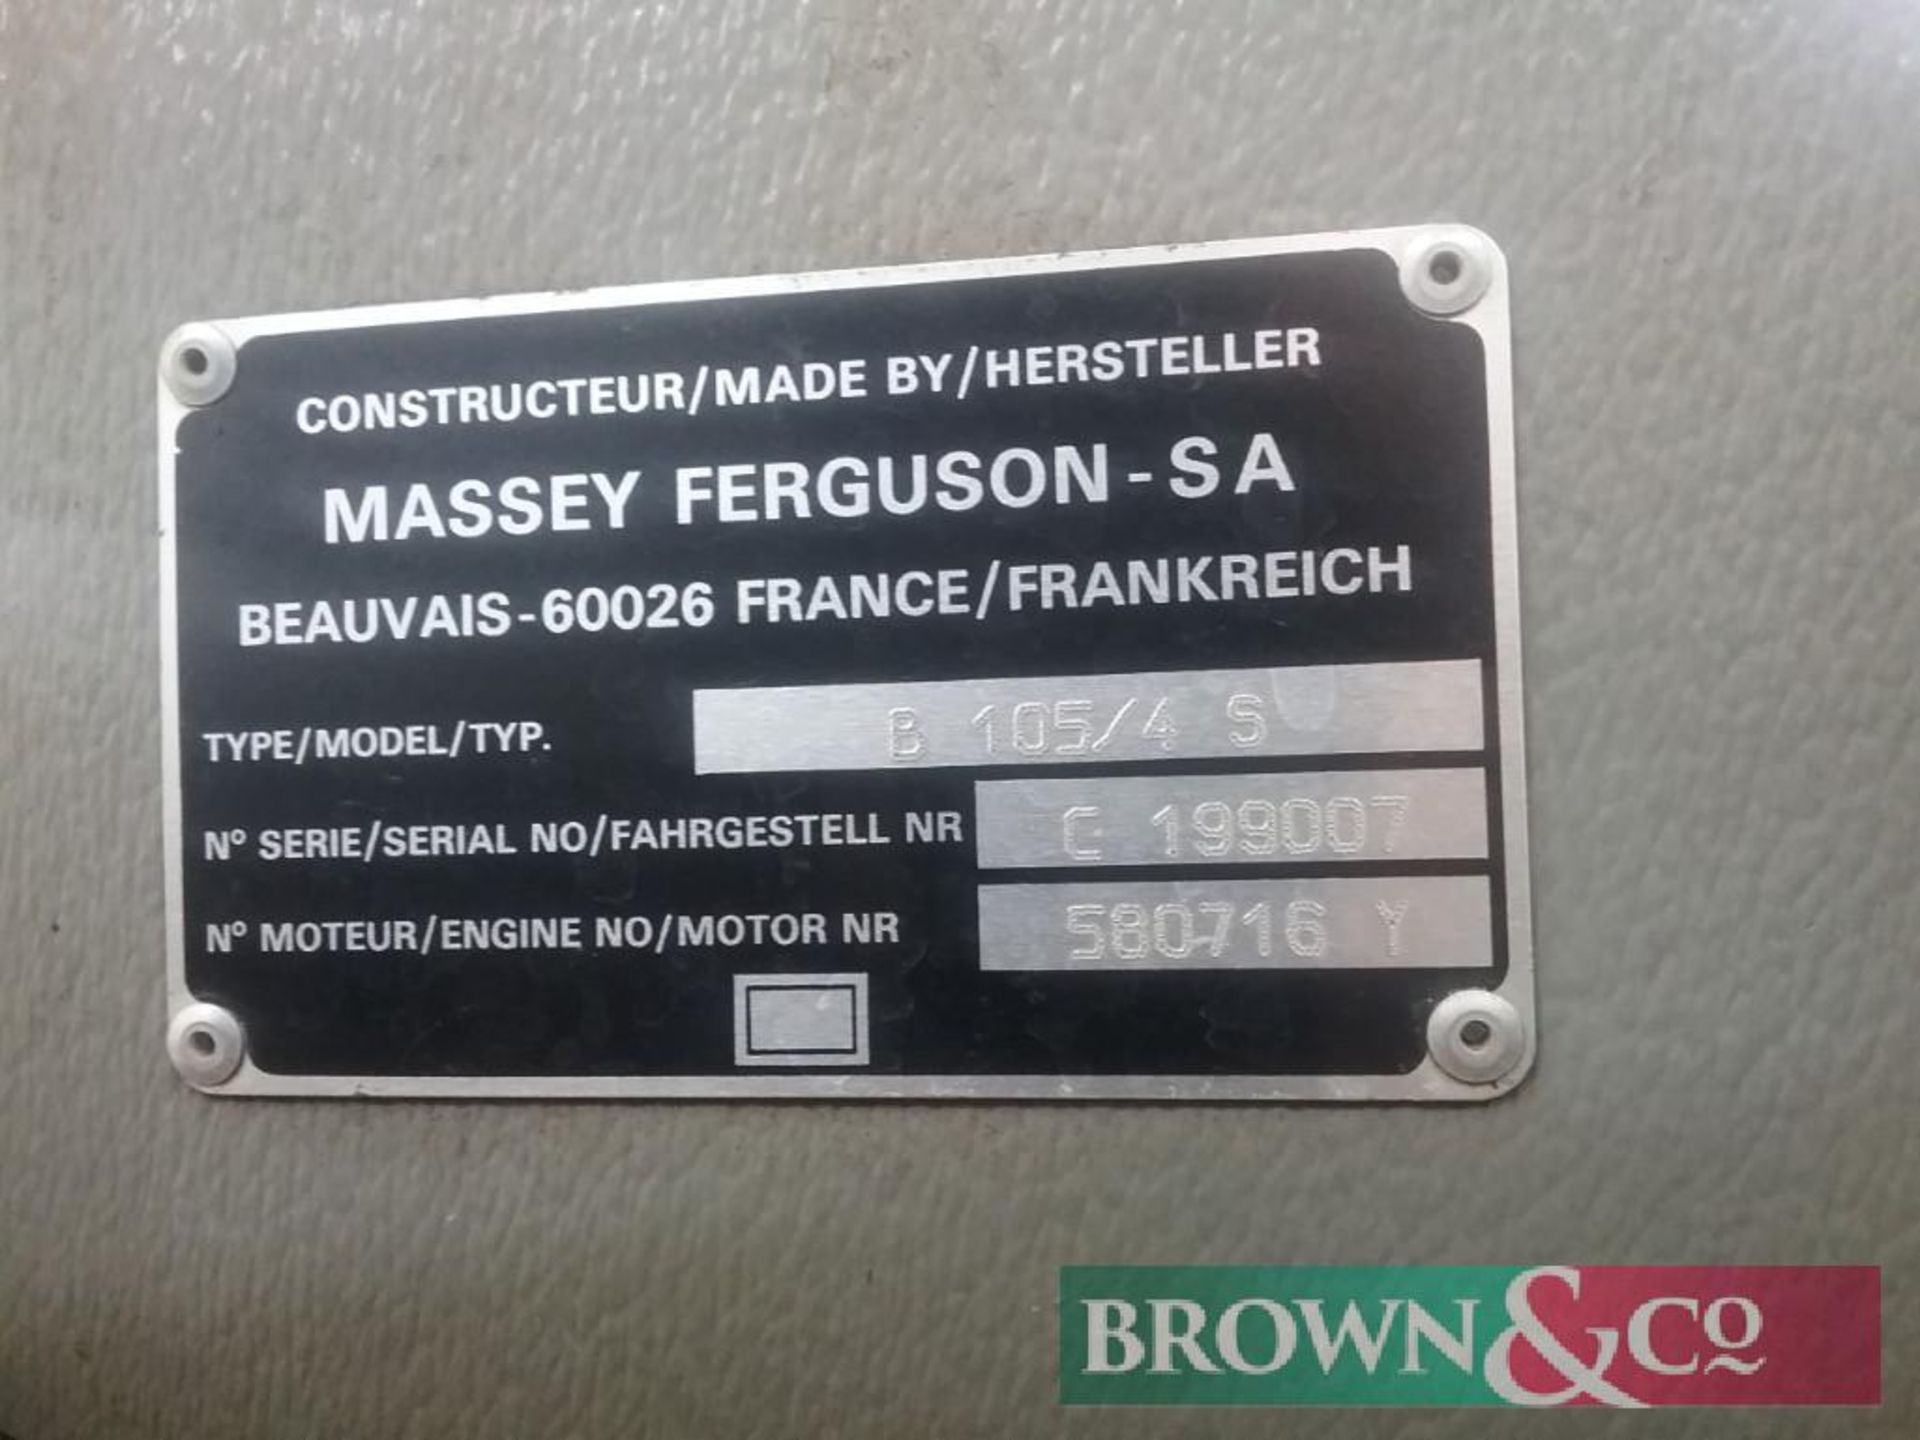 1994 Massey Ferguson 3095 Tractor - Image 5 of 5